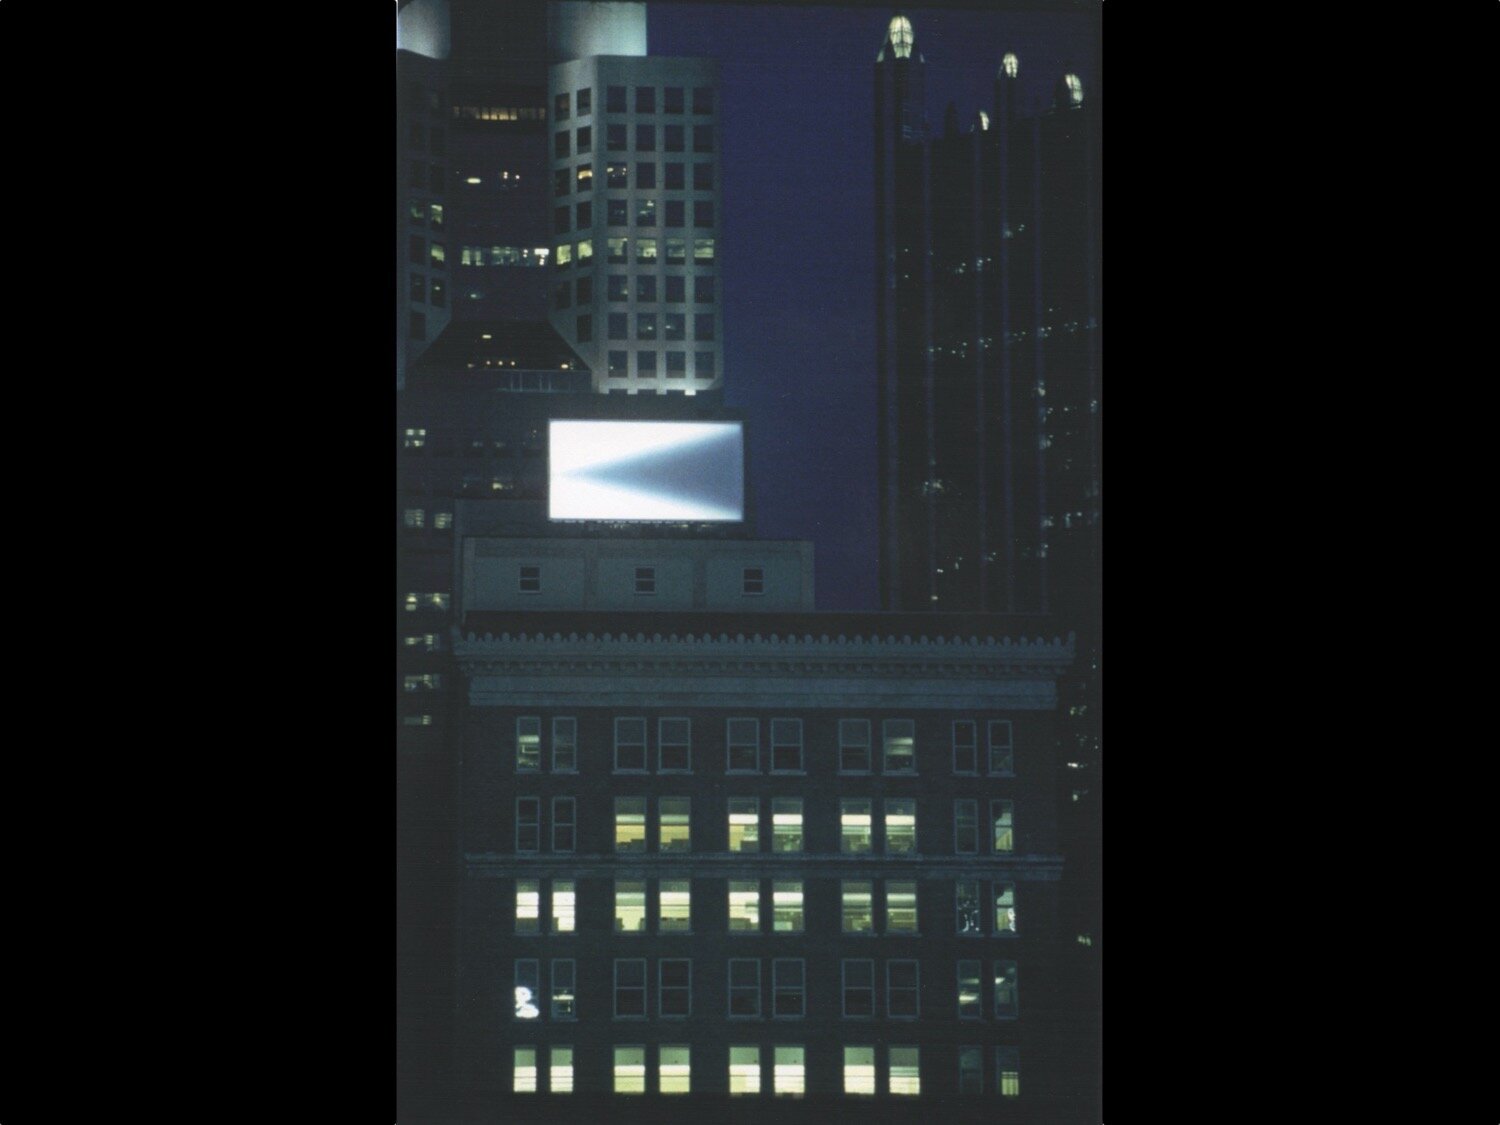  Billboard
the Skyline, Pittsburgh, 2001
(photo courtesy of Gluckman Mayner Architects) 